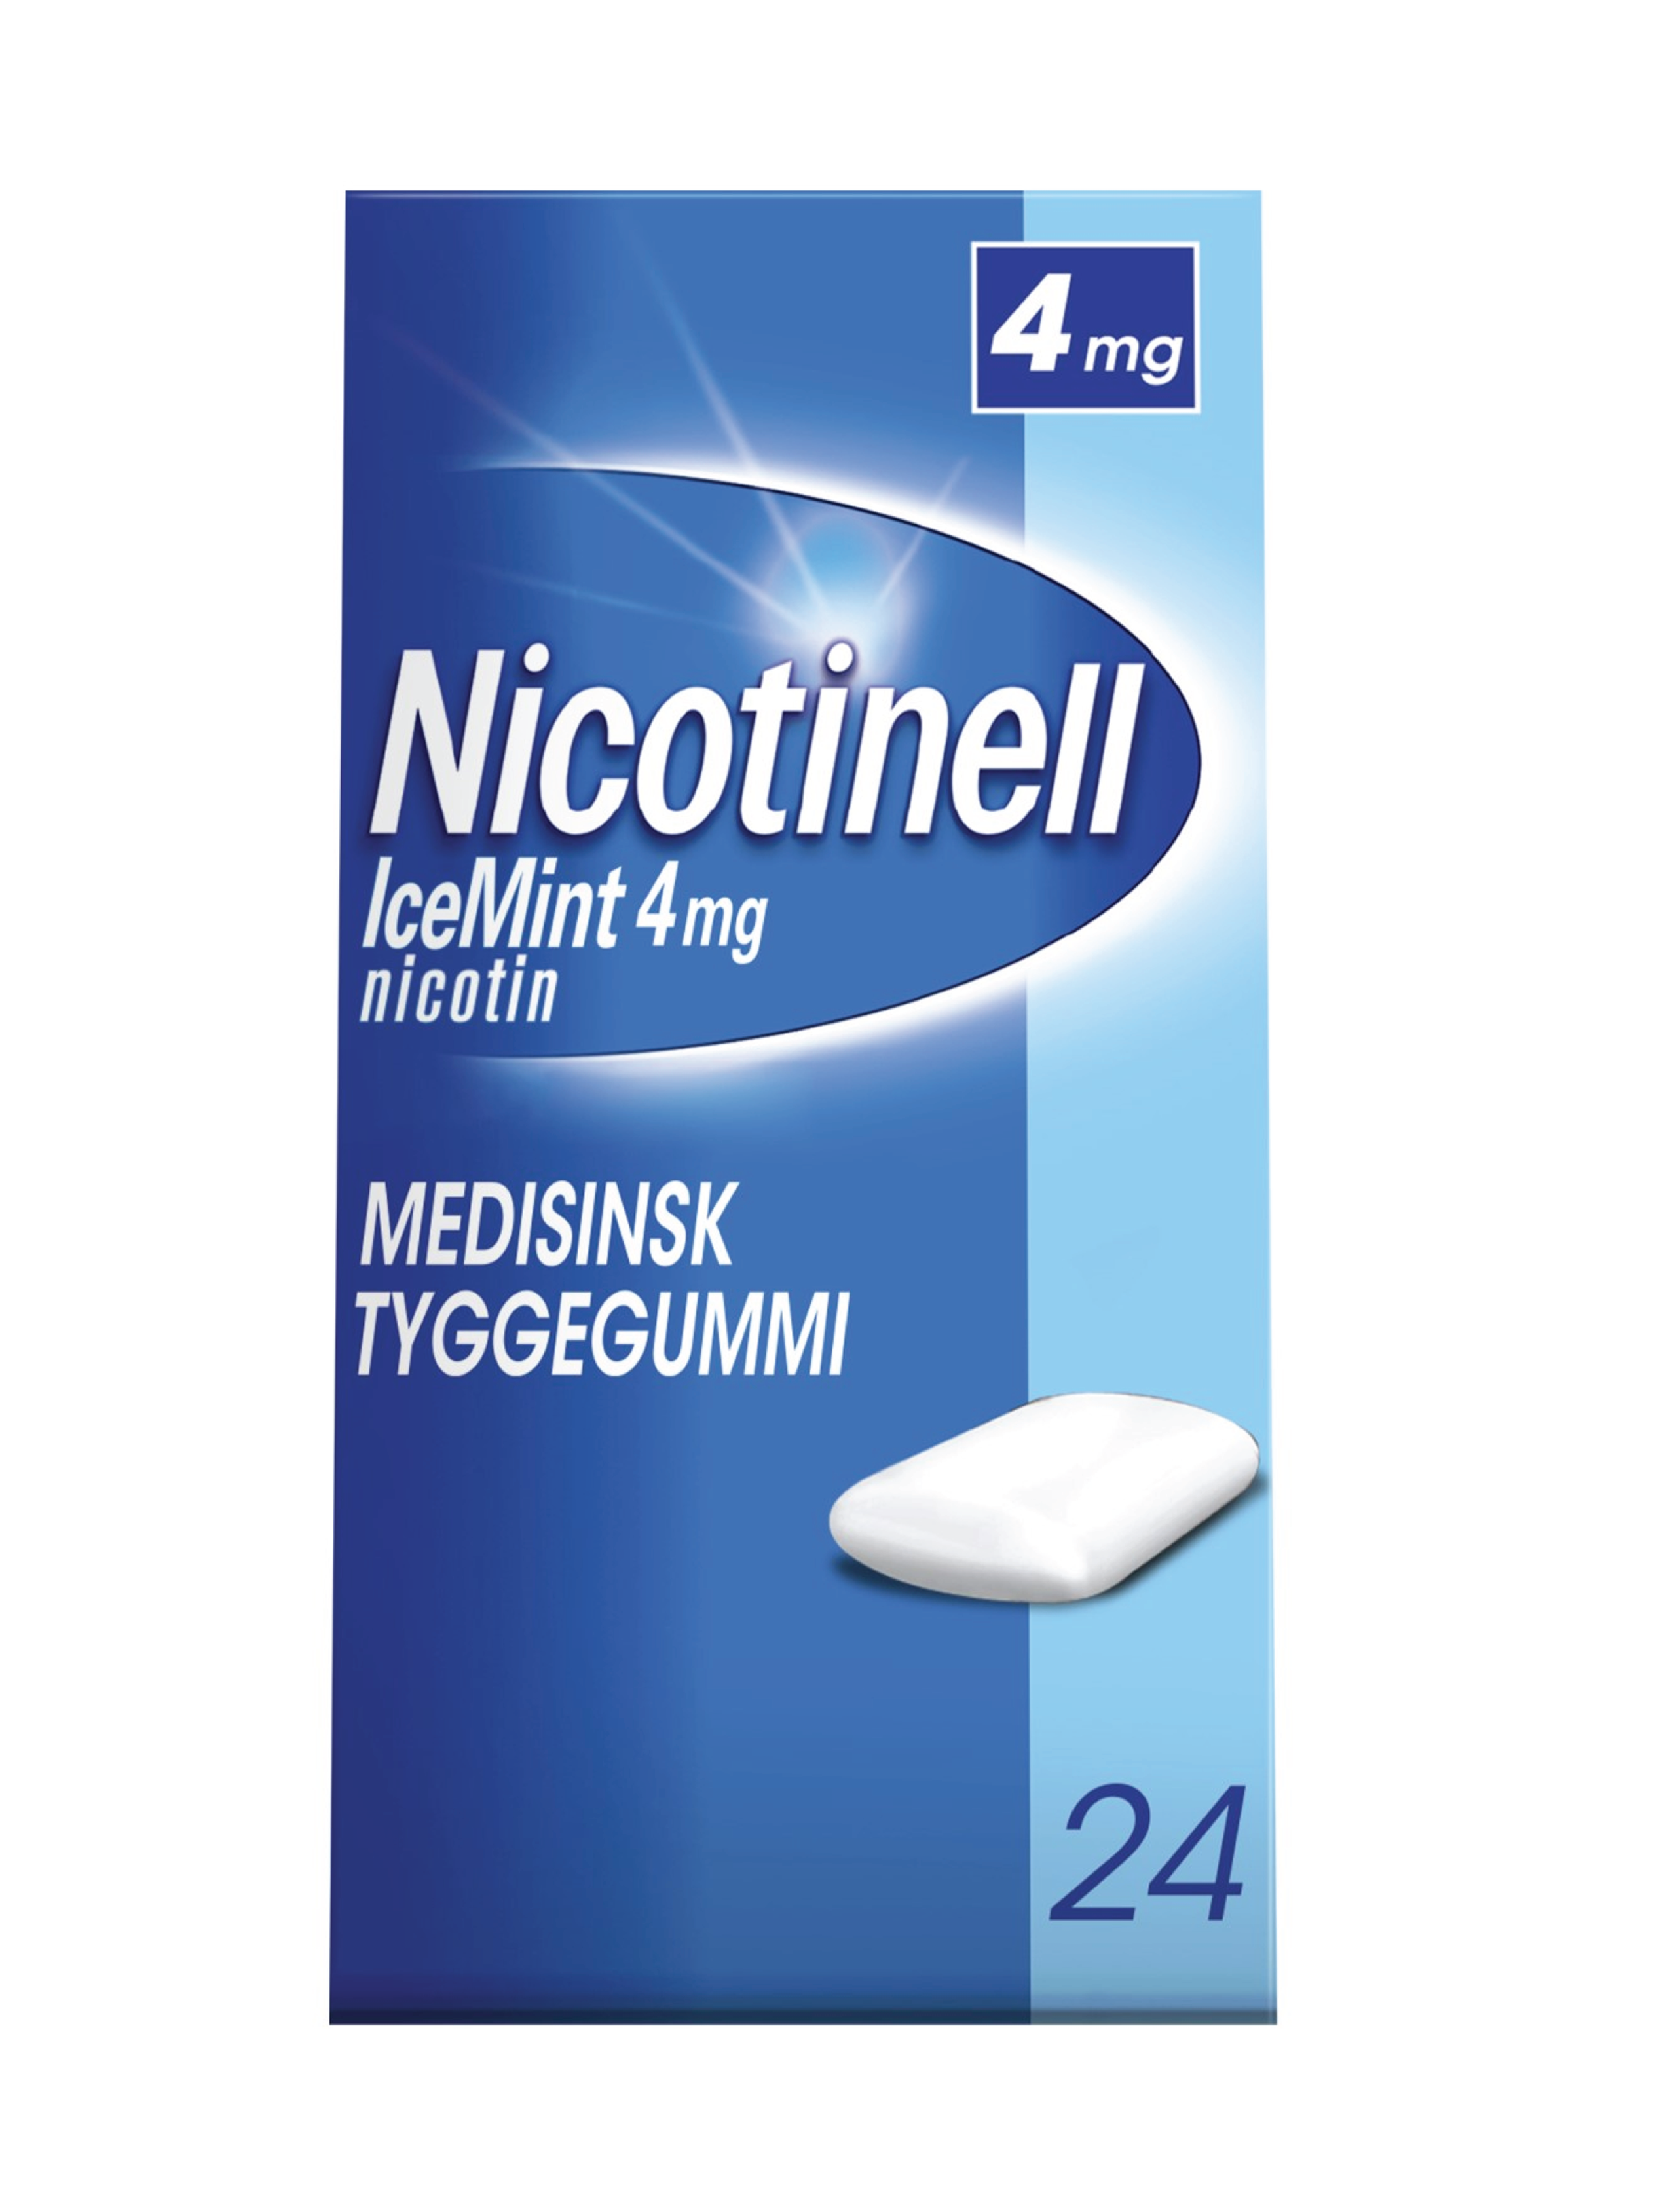 Nicotinell 4 mg tyggegummi, Icemint, 24 stk.